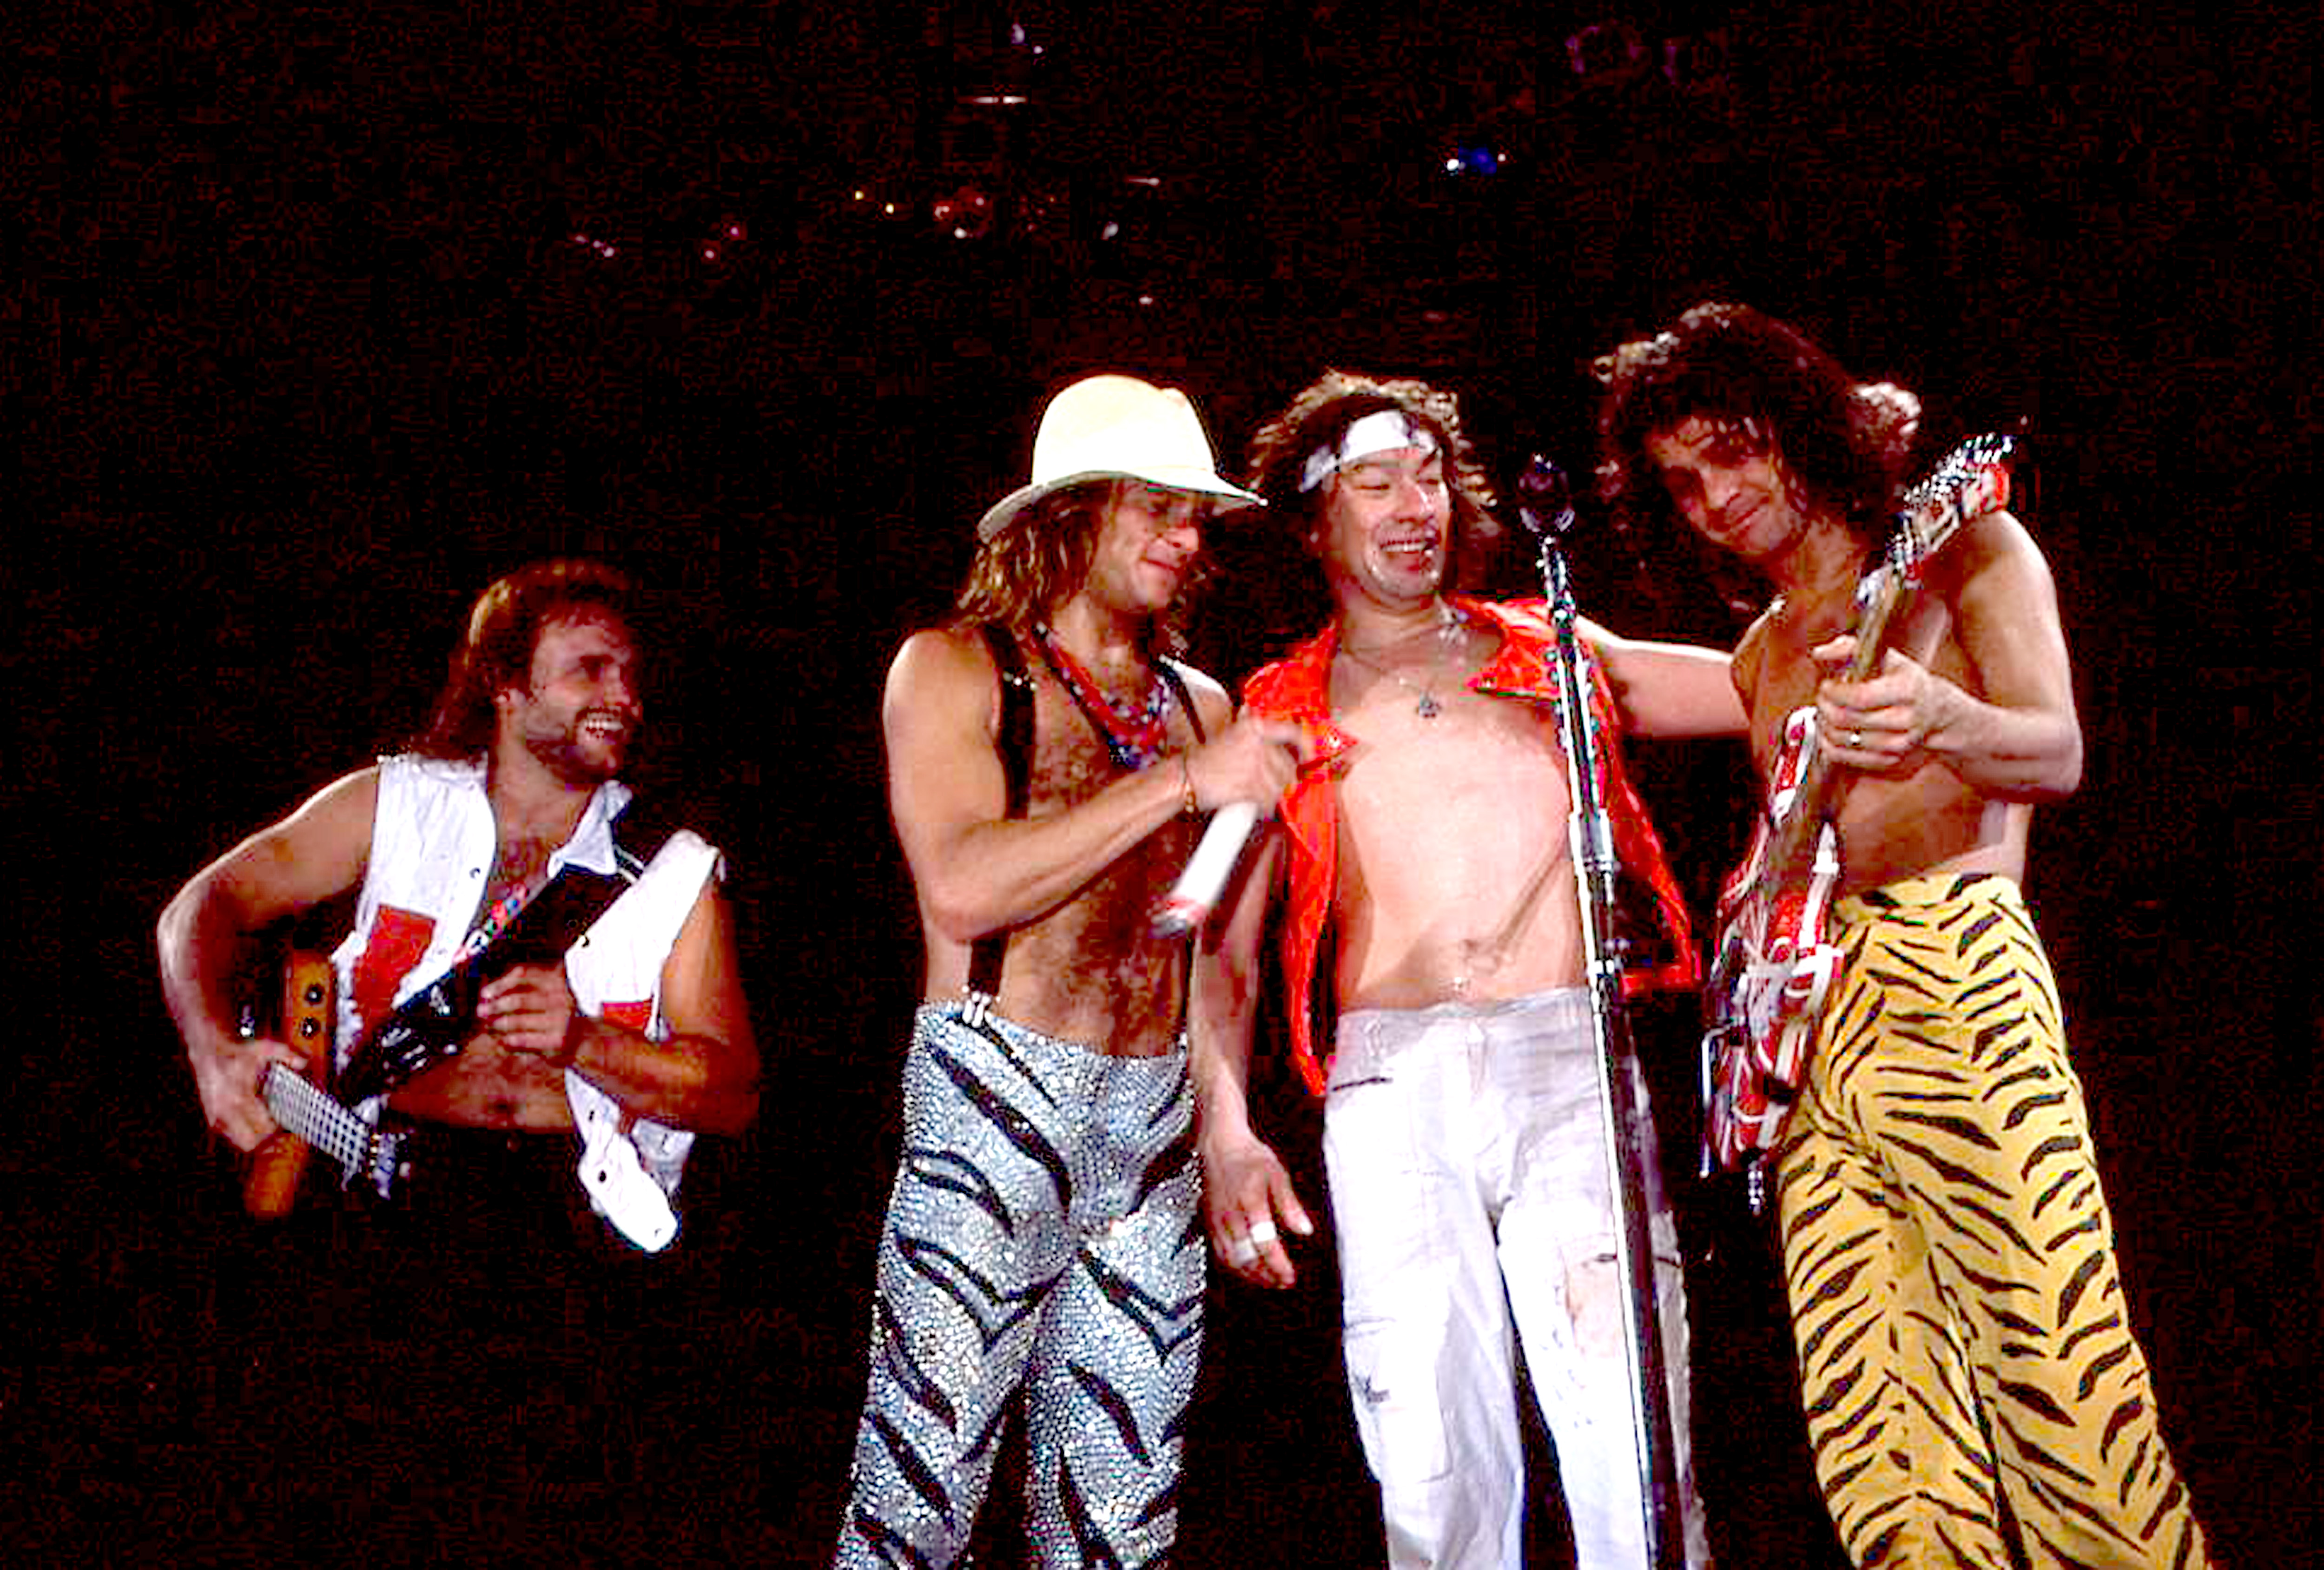 Eddie Van Halen, Lady Gaga, Kurt Cobain, Prince and Bob Dylan Memorabilia Up For Auction